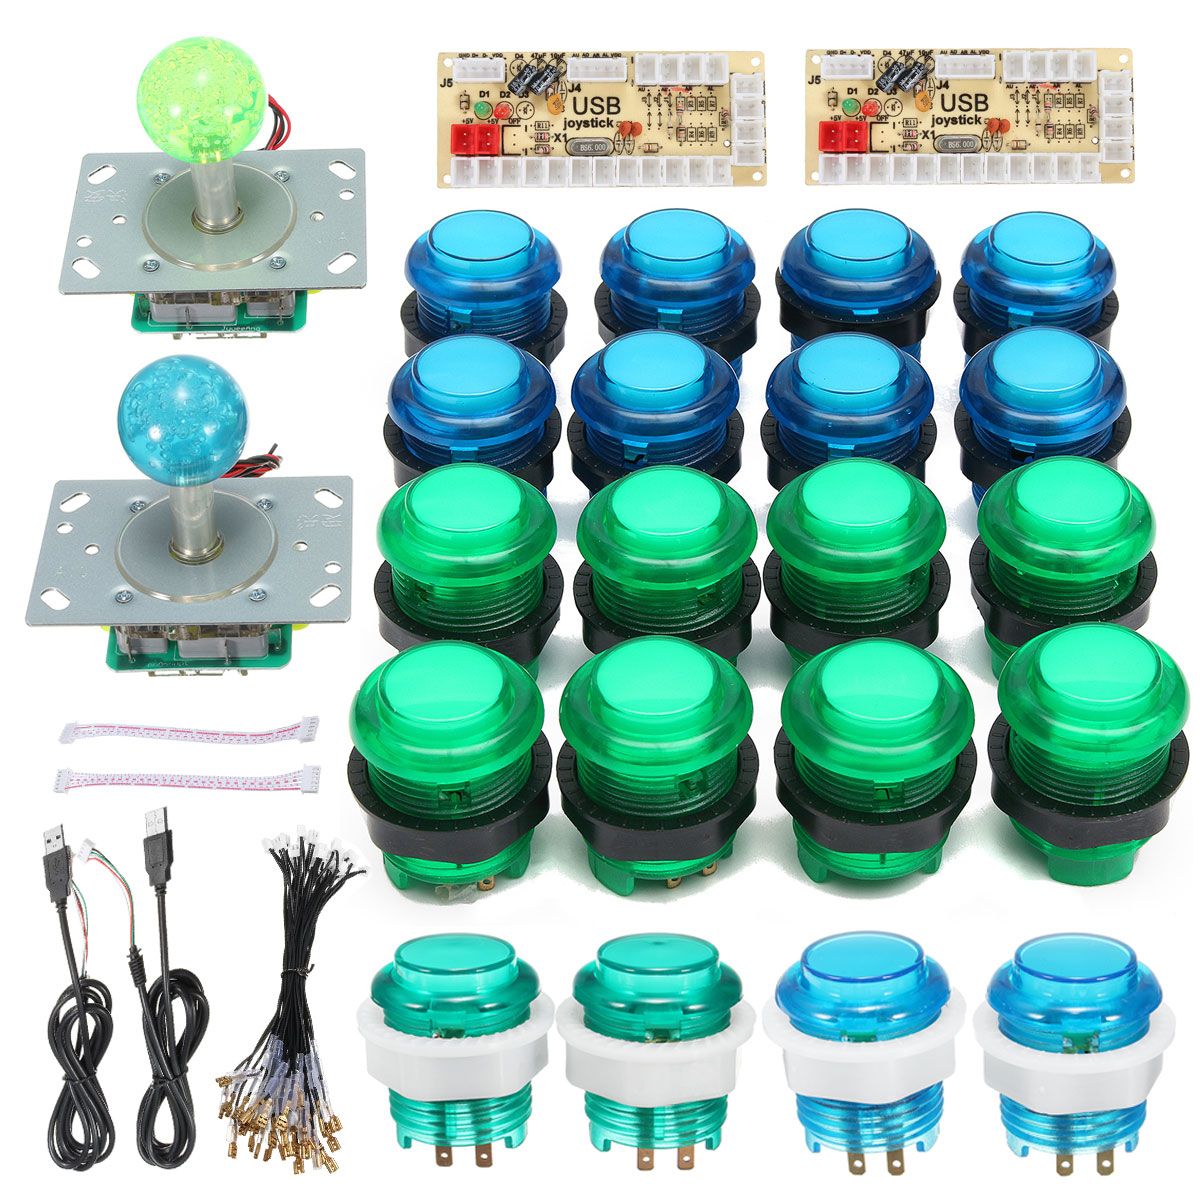 DIY Joystick Arcade Kits 2 Players With 20 LED Arcade Buttons + 2 Joysticks + 2 USB Encoder Kit + Cables Arcade Game Parts Set: 3